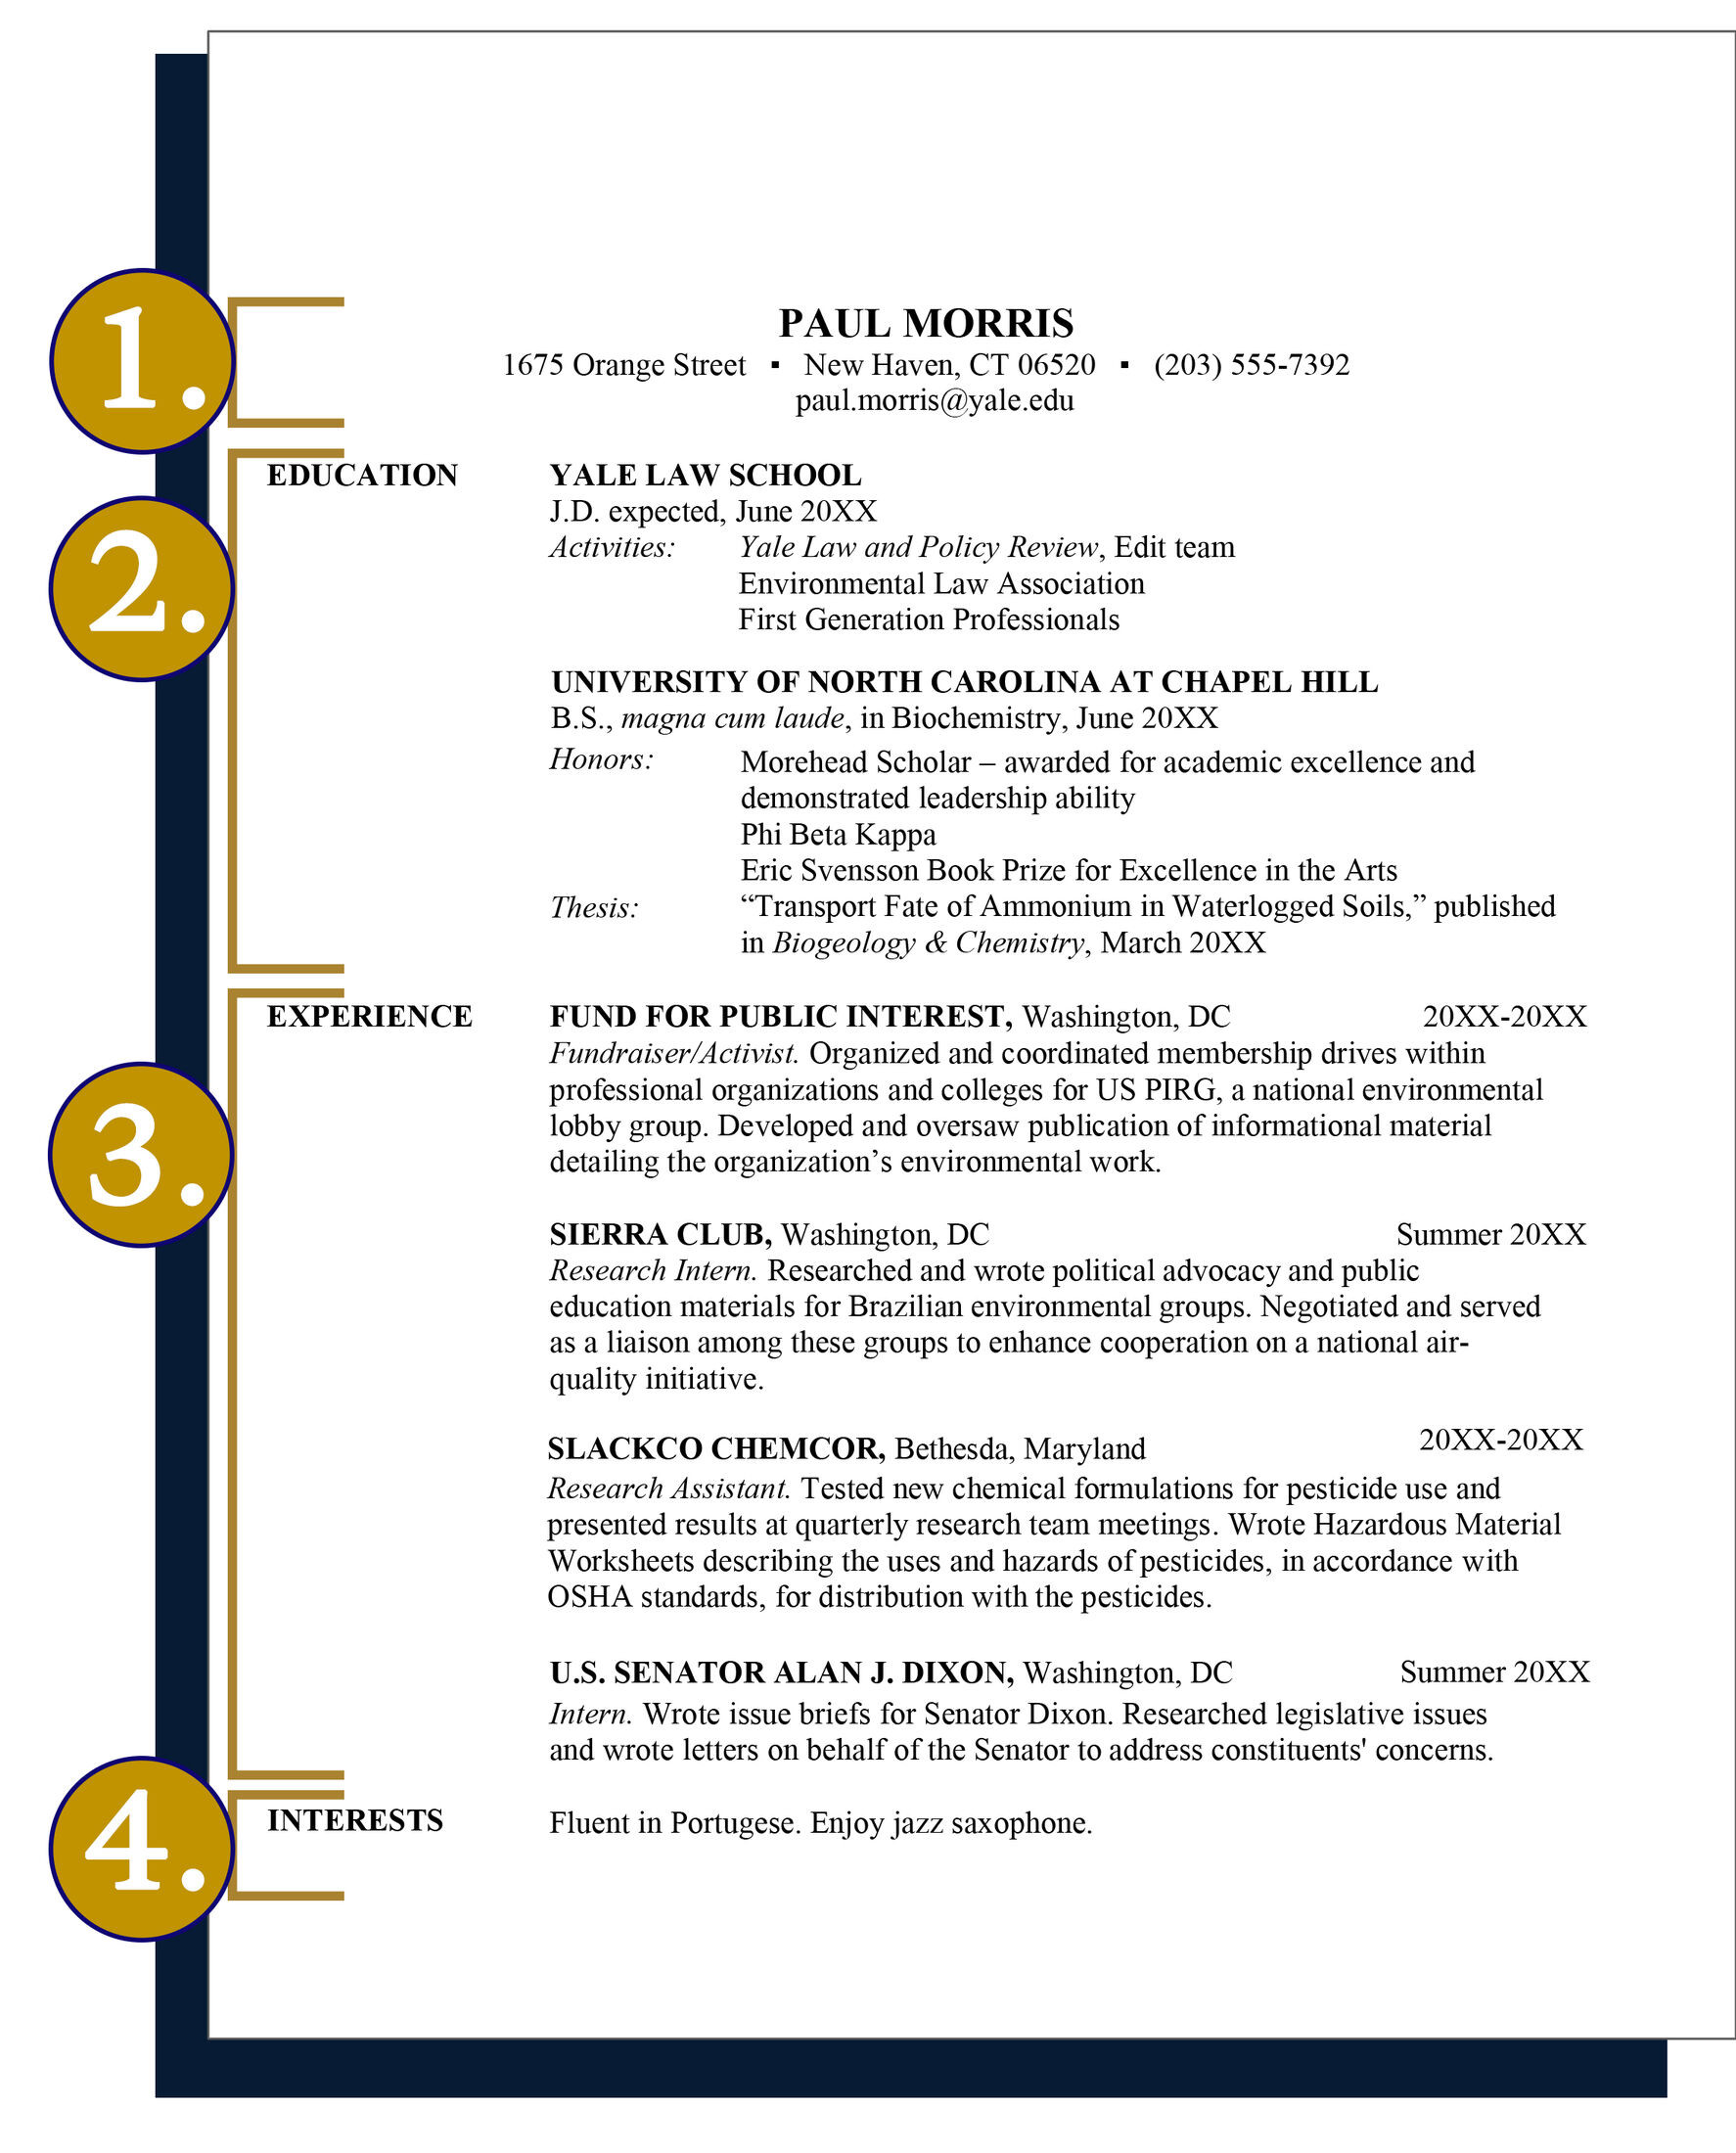 Sample Resume for Law School Graduate Resume Advice & Samples – Yale Law School